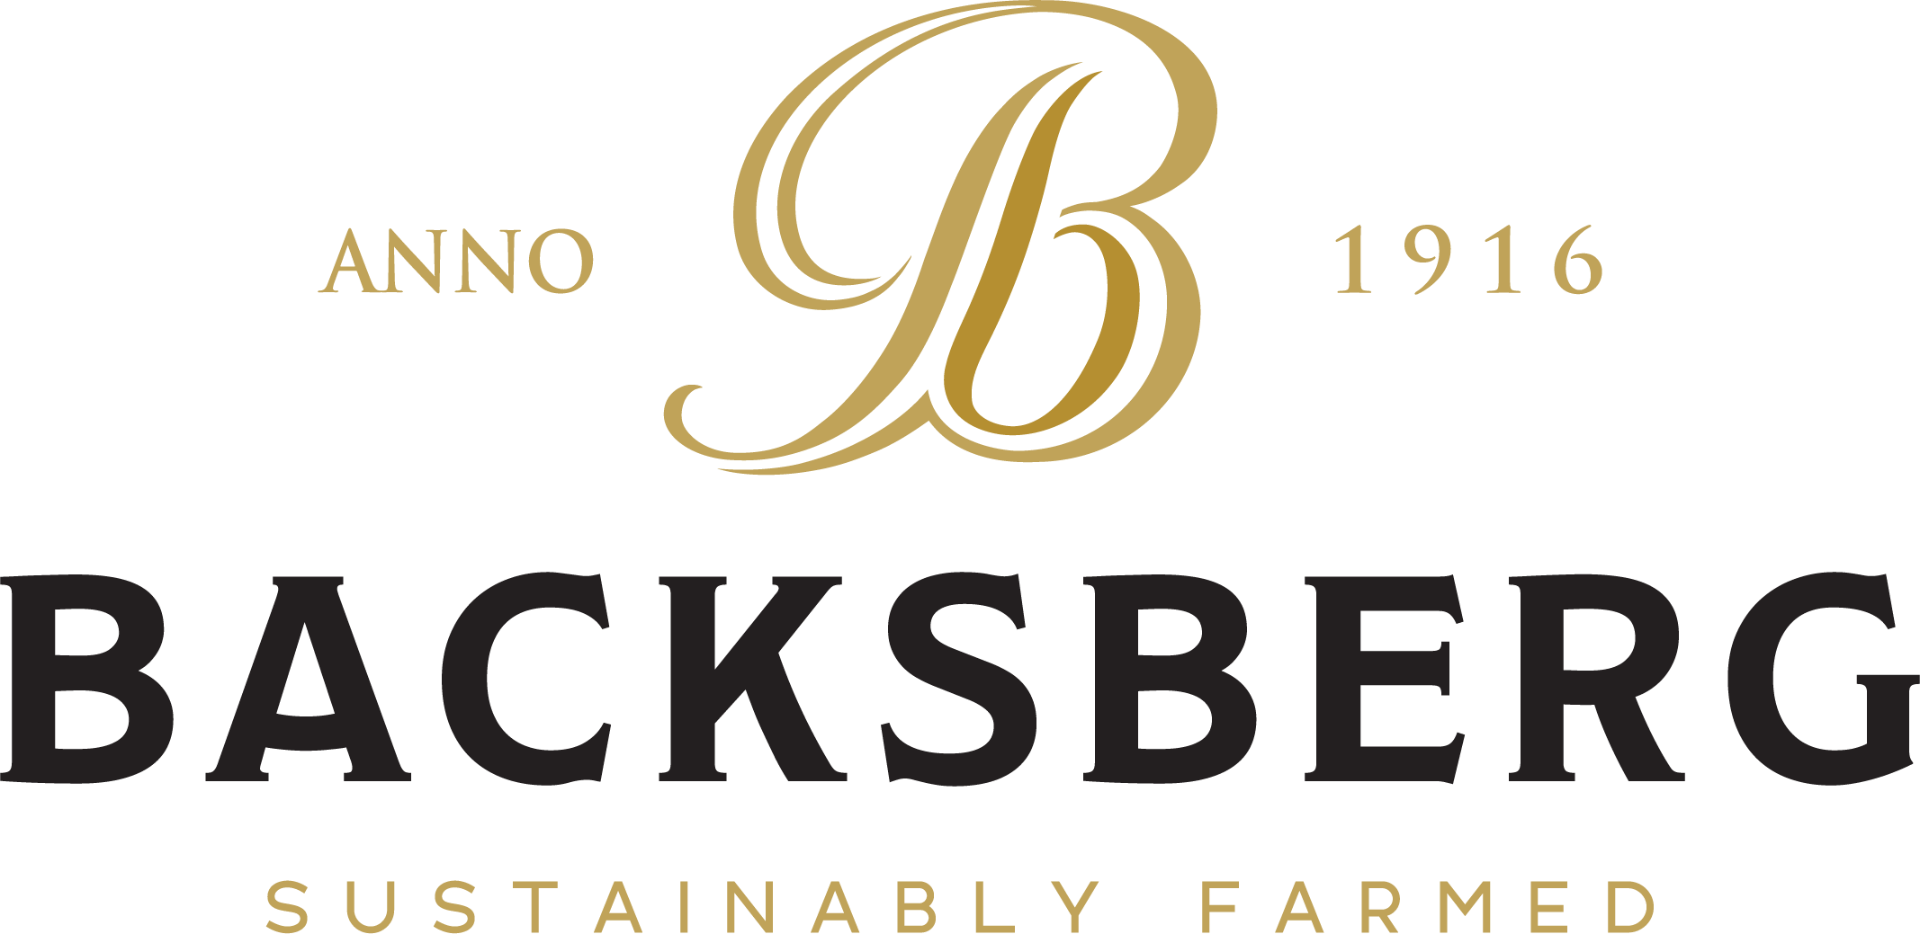 The Backsberg Wine Estate logo.